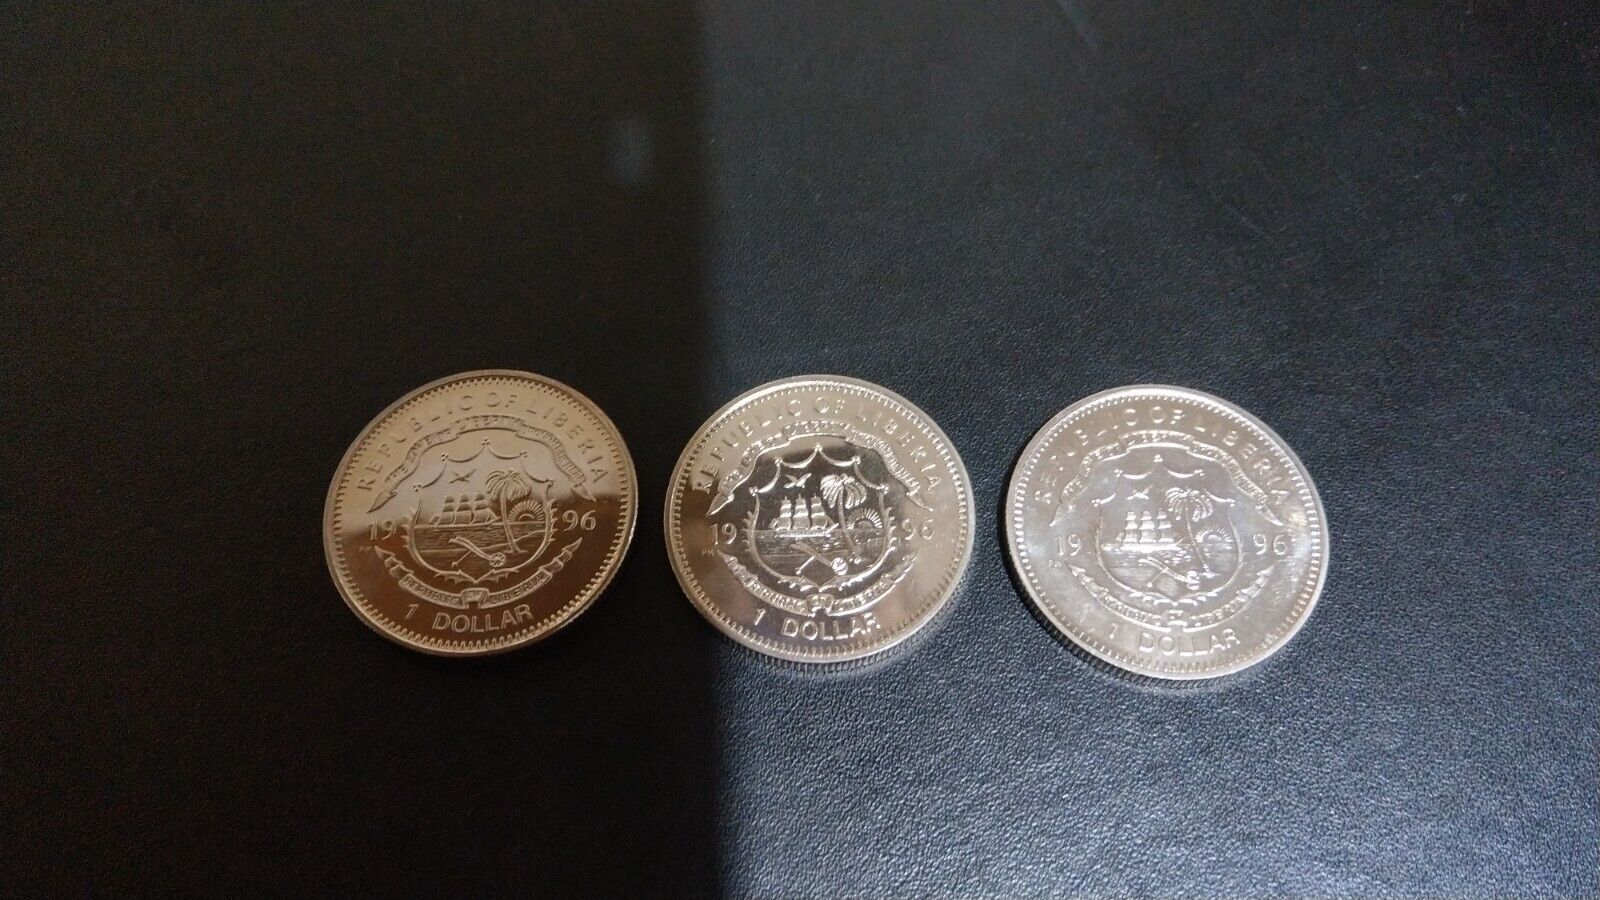 3 Liberia $1 Coins Star Trek Theme